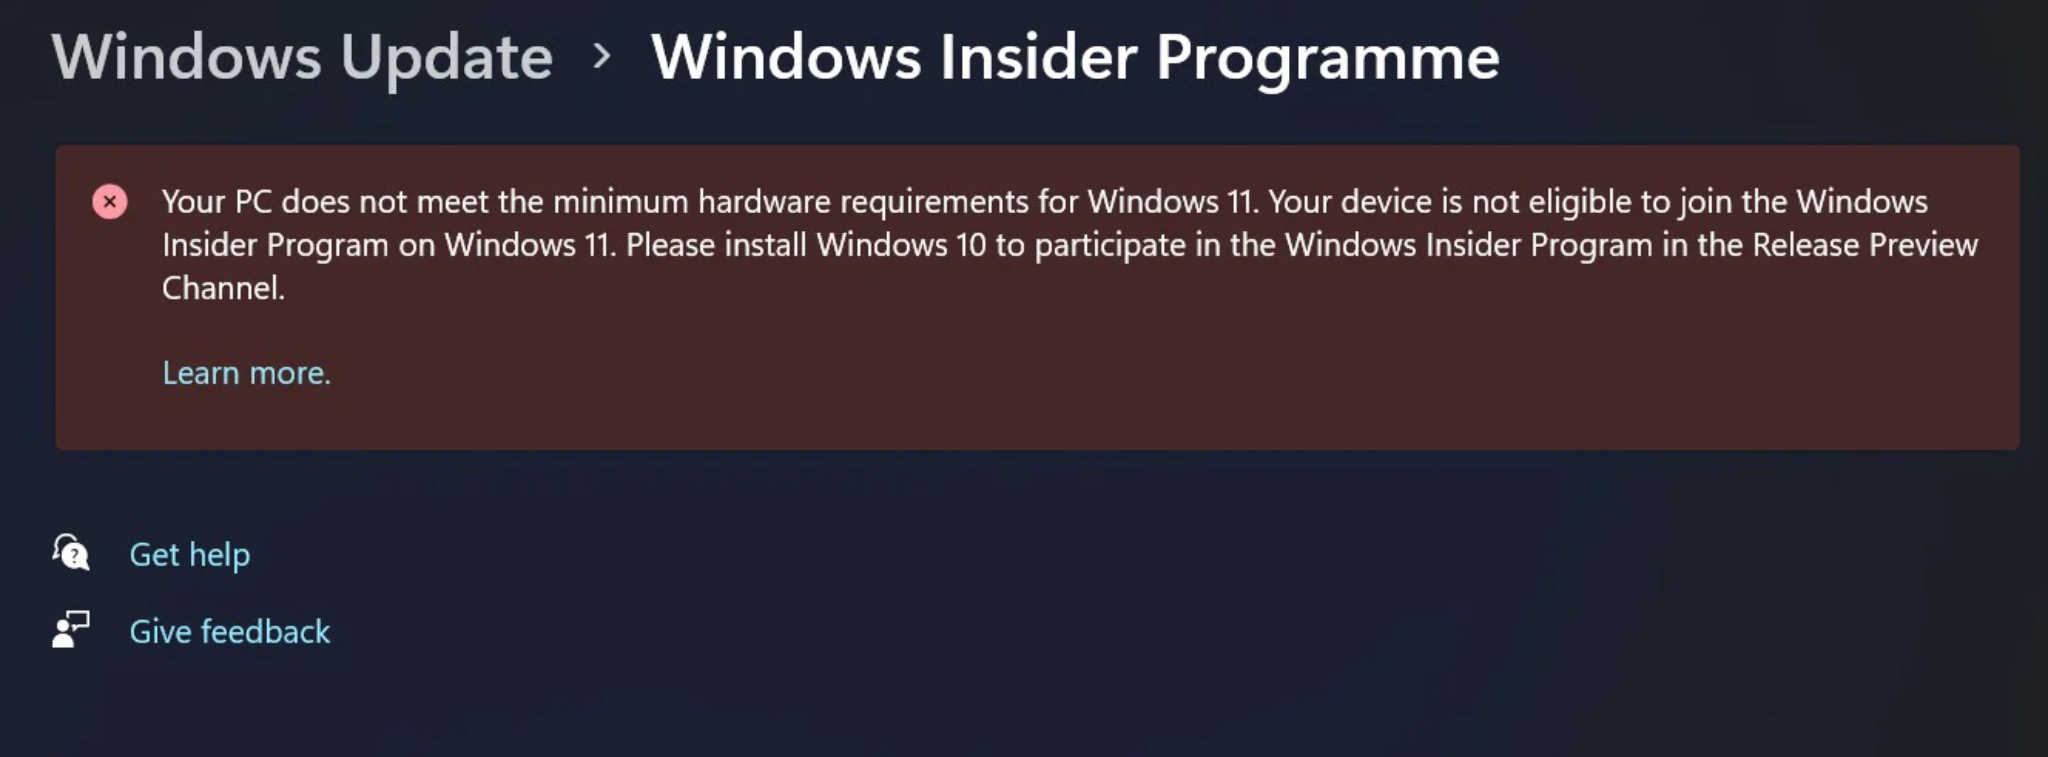 Windows-Insider-Programme.jpg